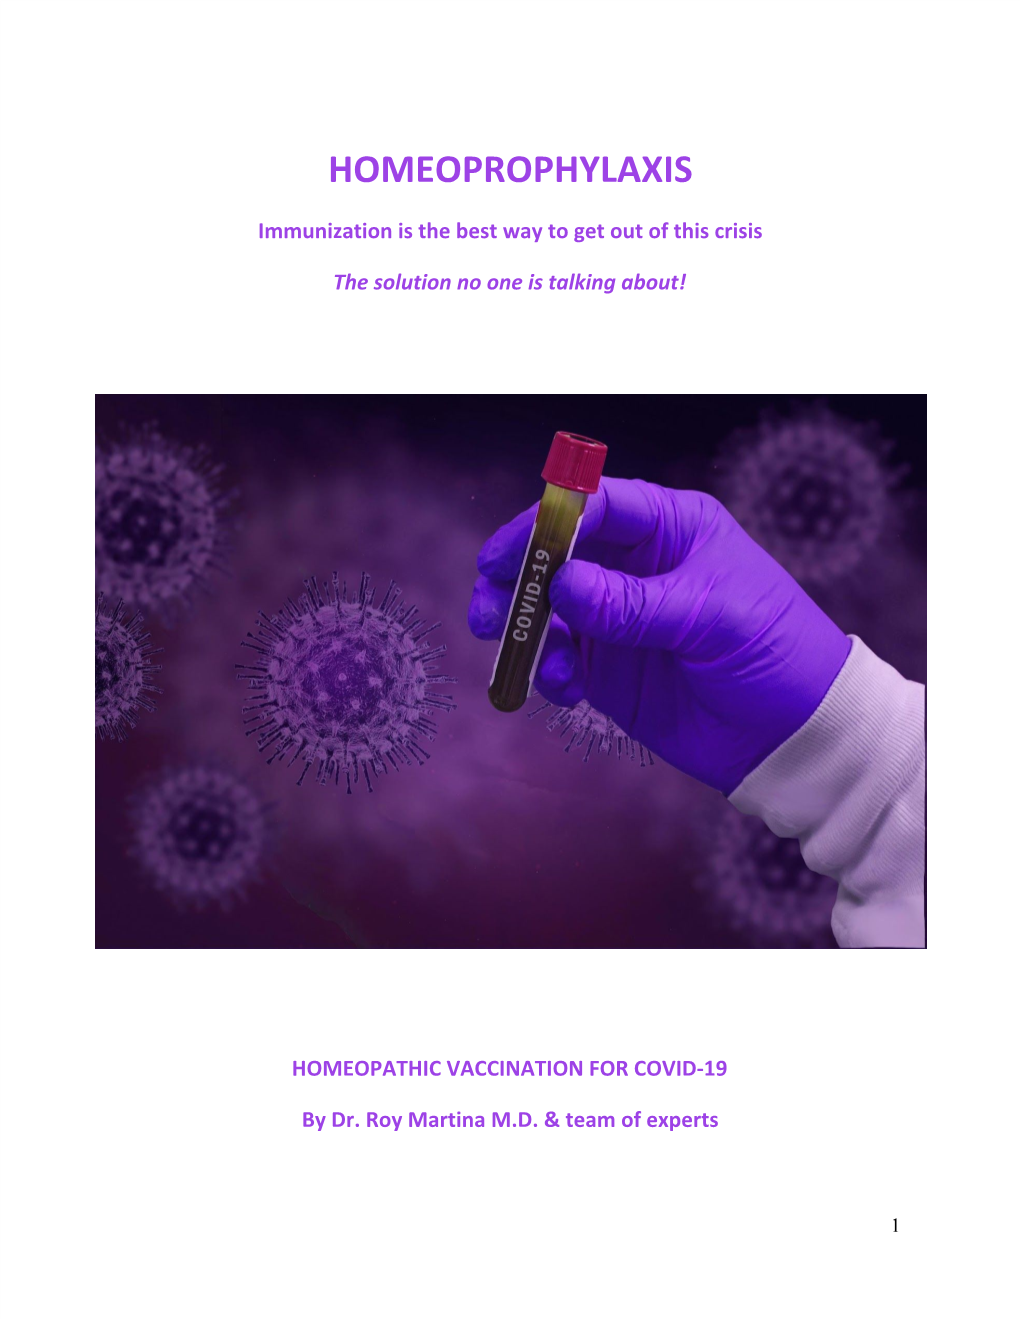 Homeoprophylaxis